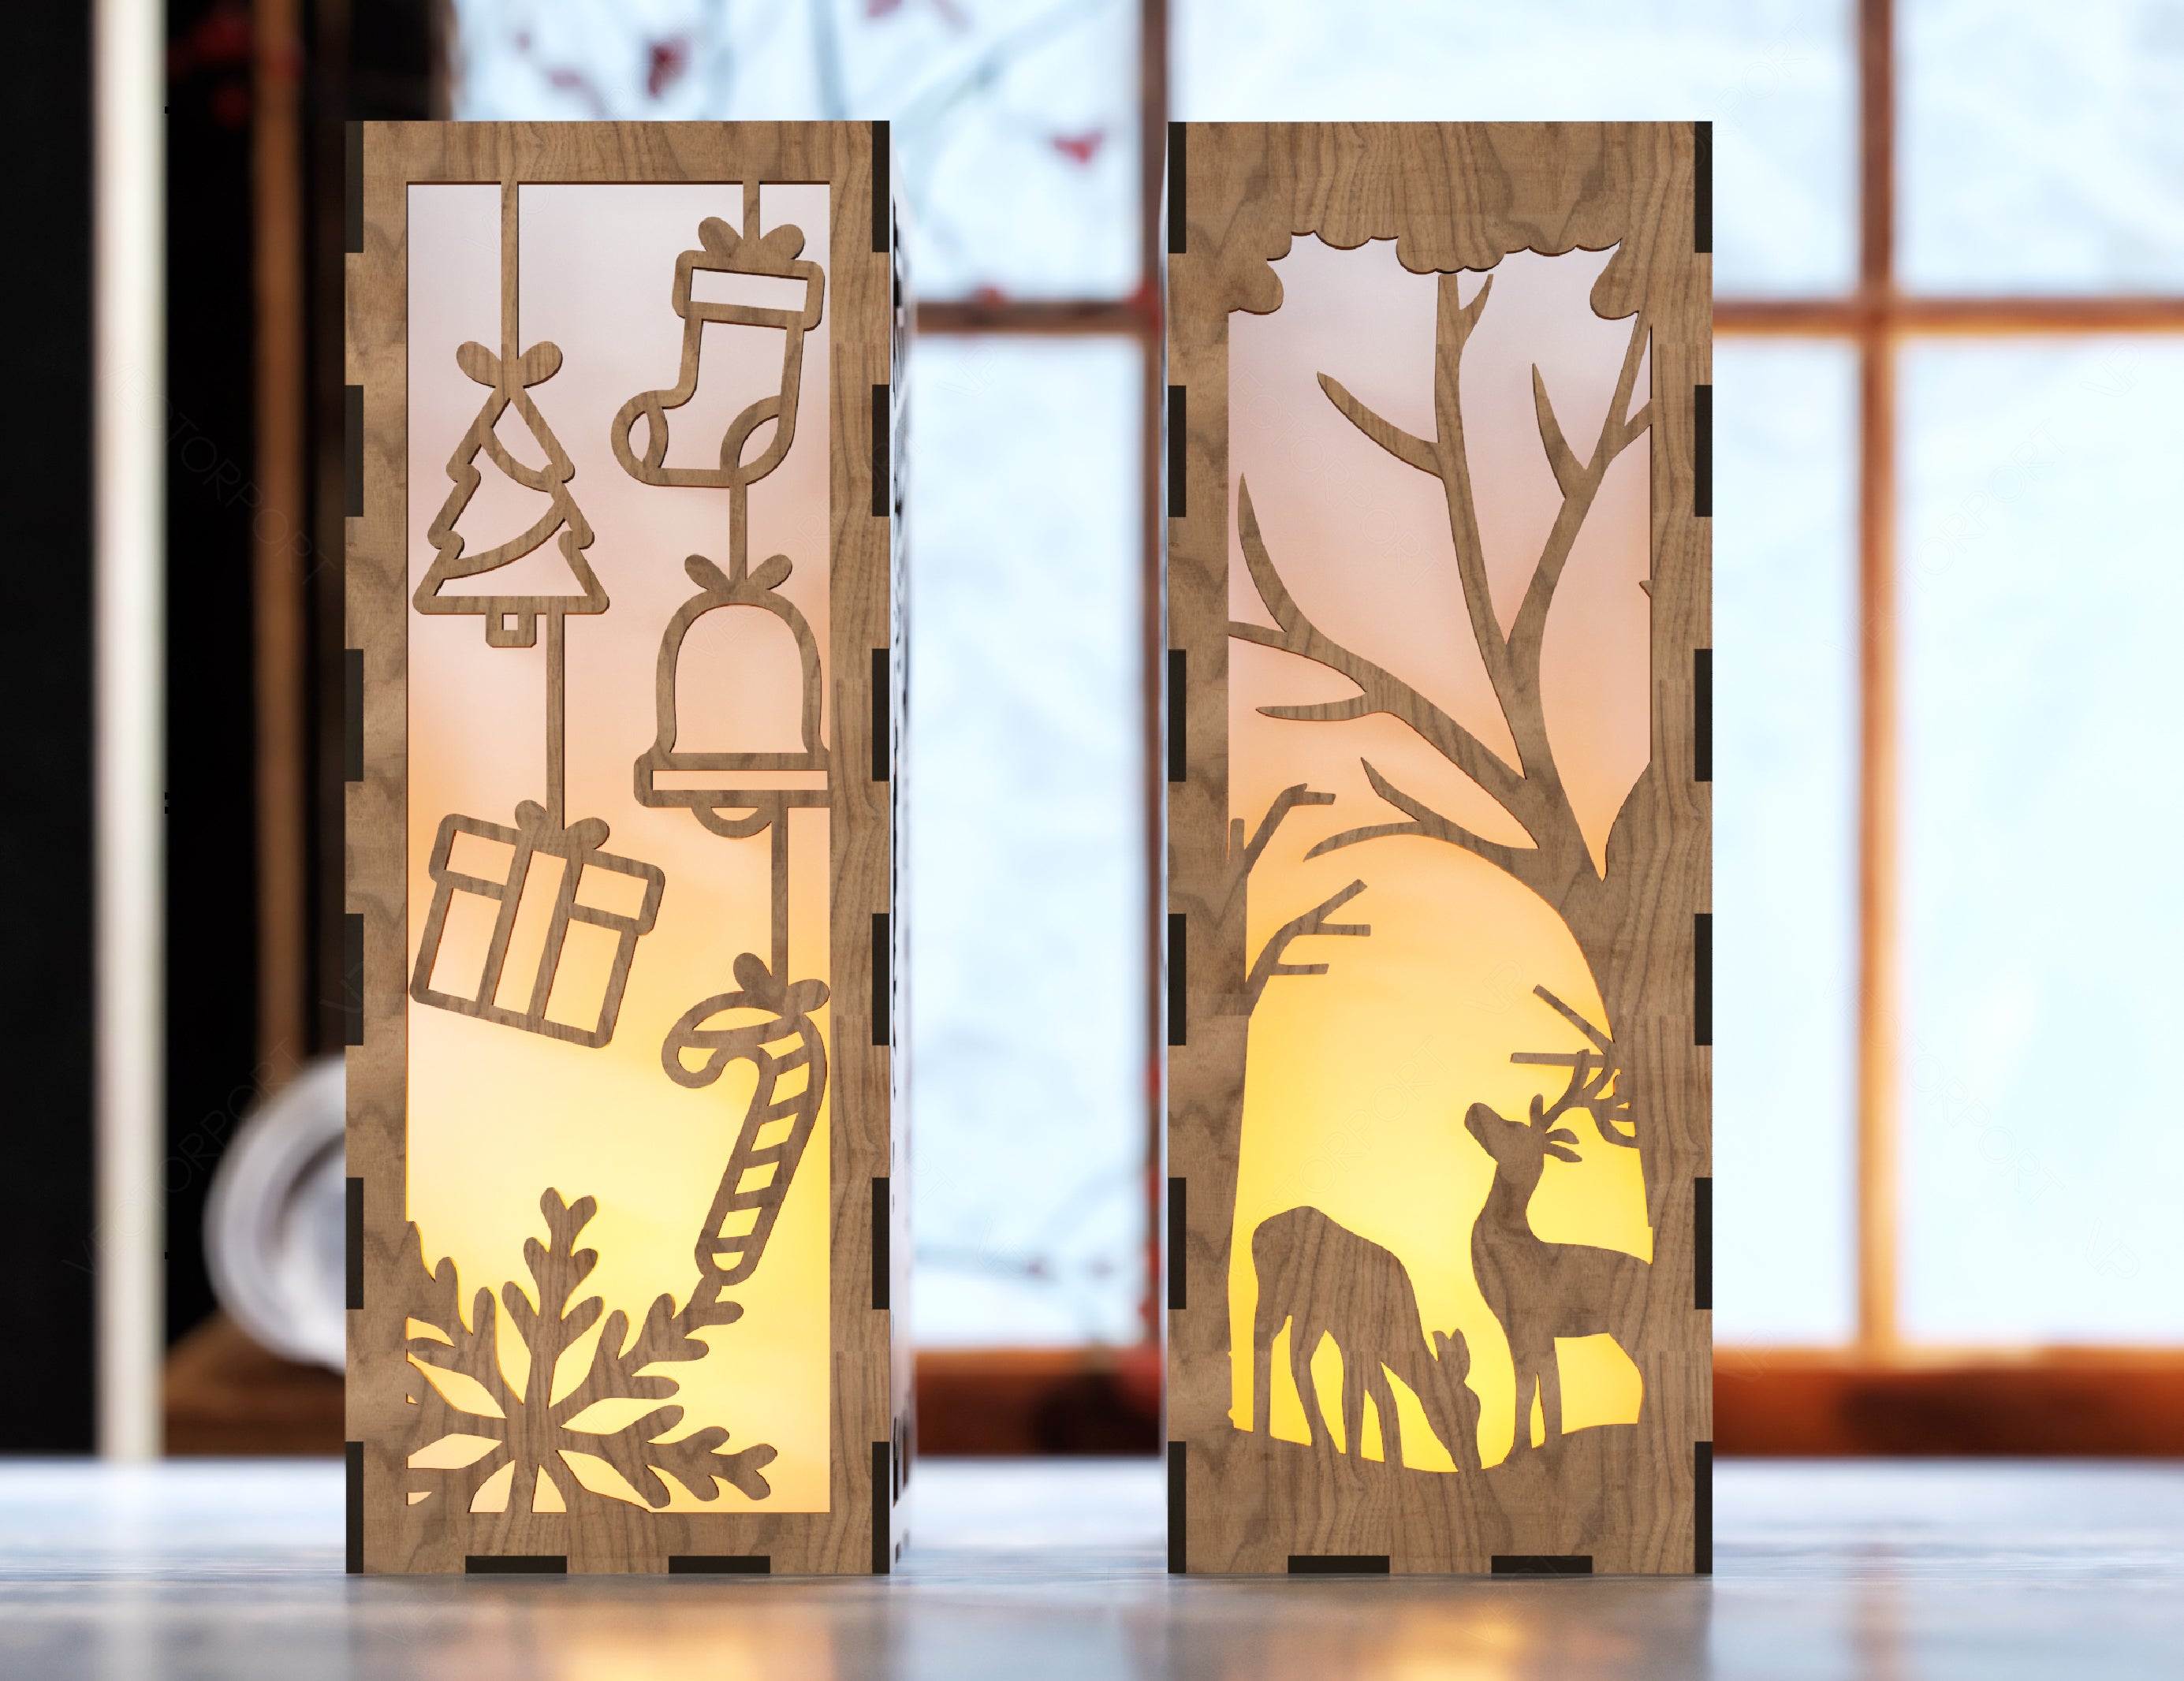 Christmas Decorative Wooden table Lamp Lantern New Year Candle Holder Laser Cut Tea light SVG Cut Plan |#U160|